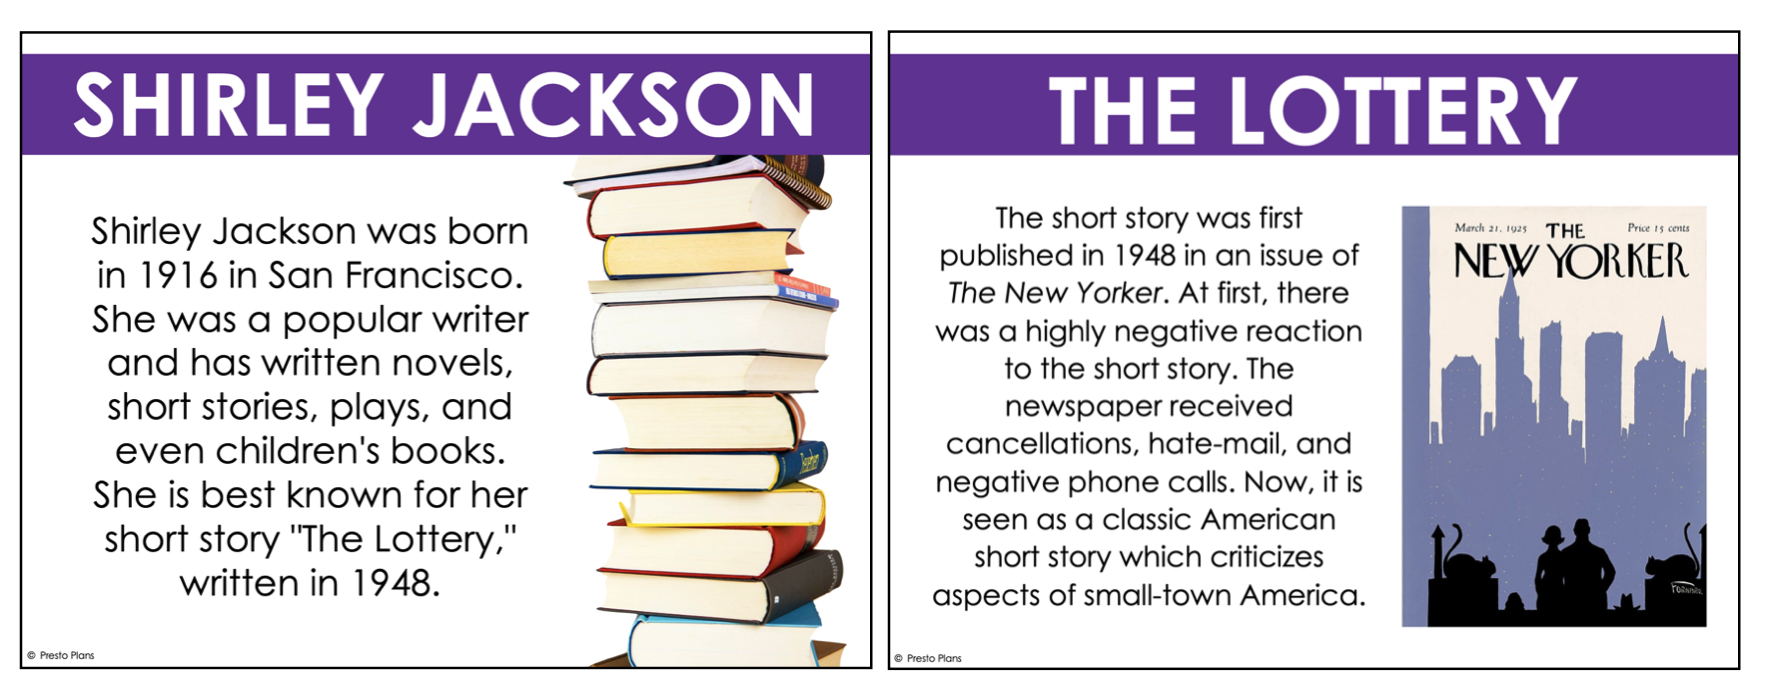 Shirley Jackson Author Biography Presentation